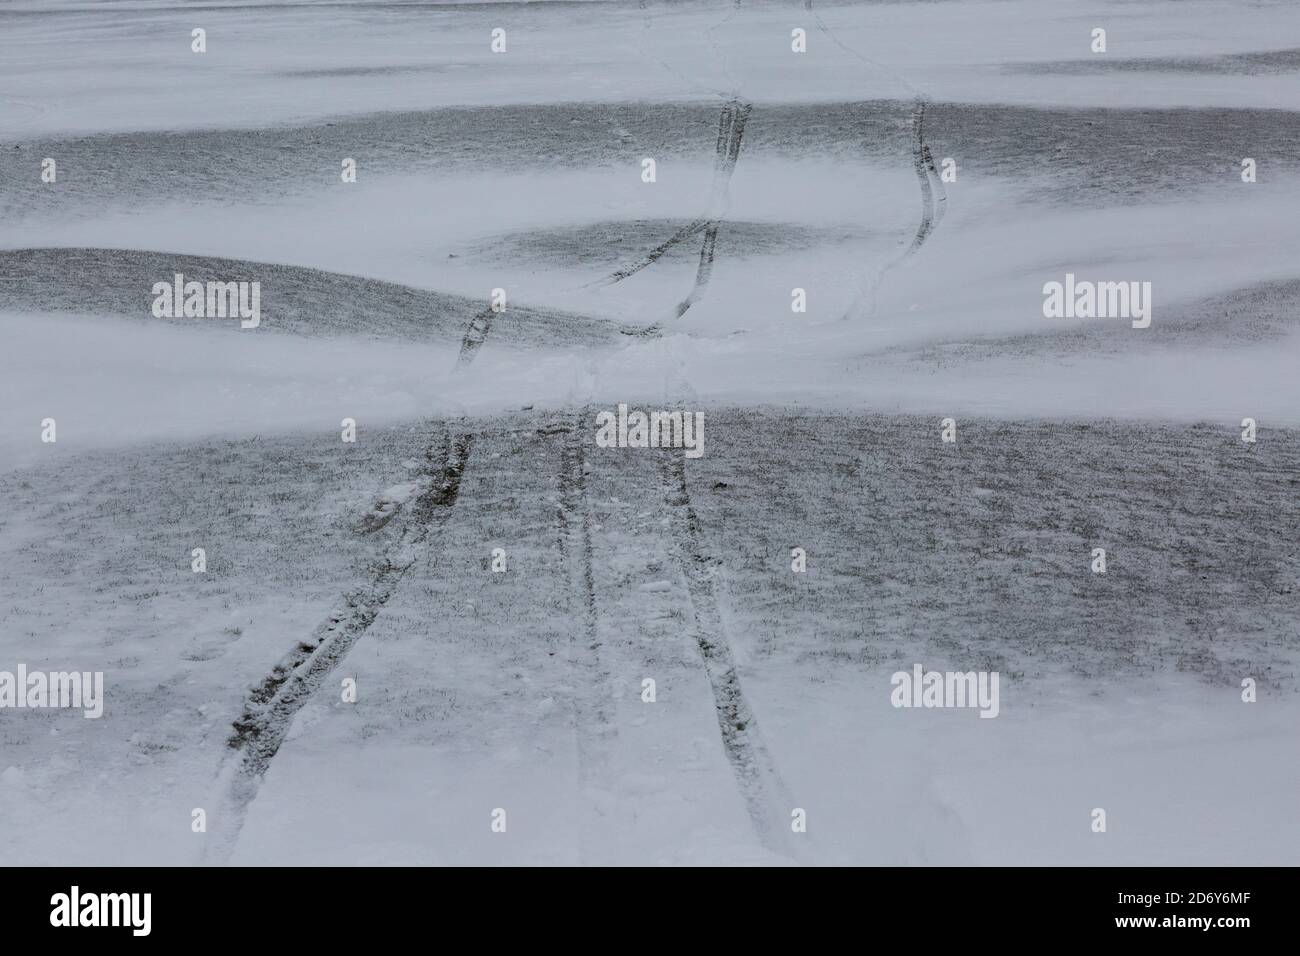 Tyre tracks across a snowy landscape Stock Photo